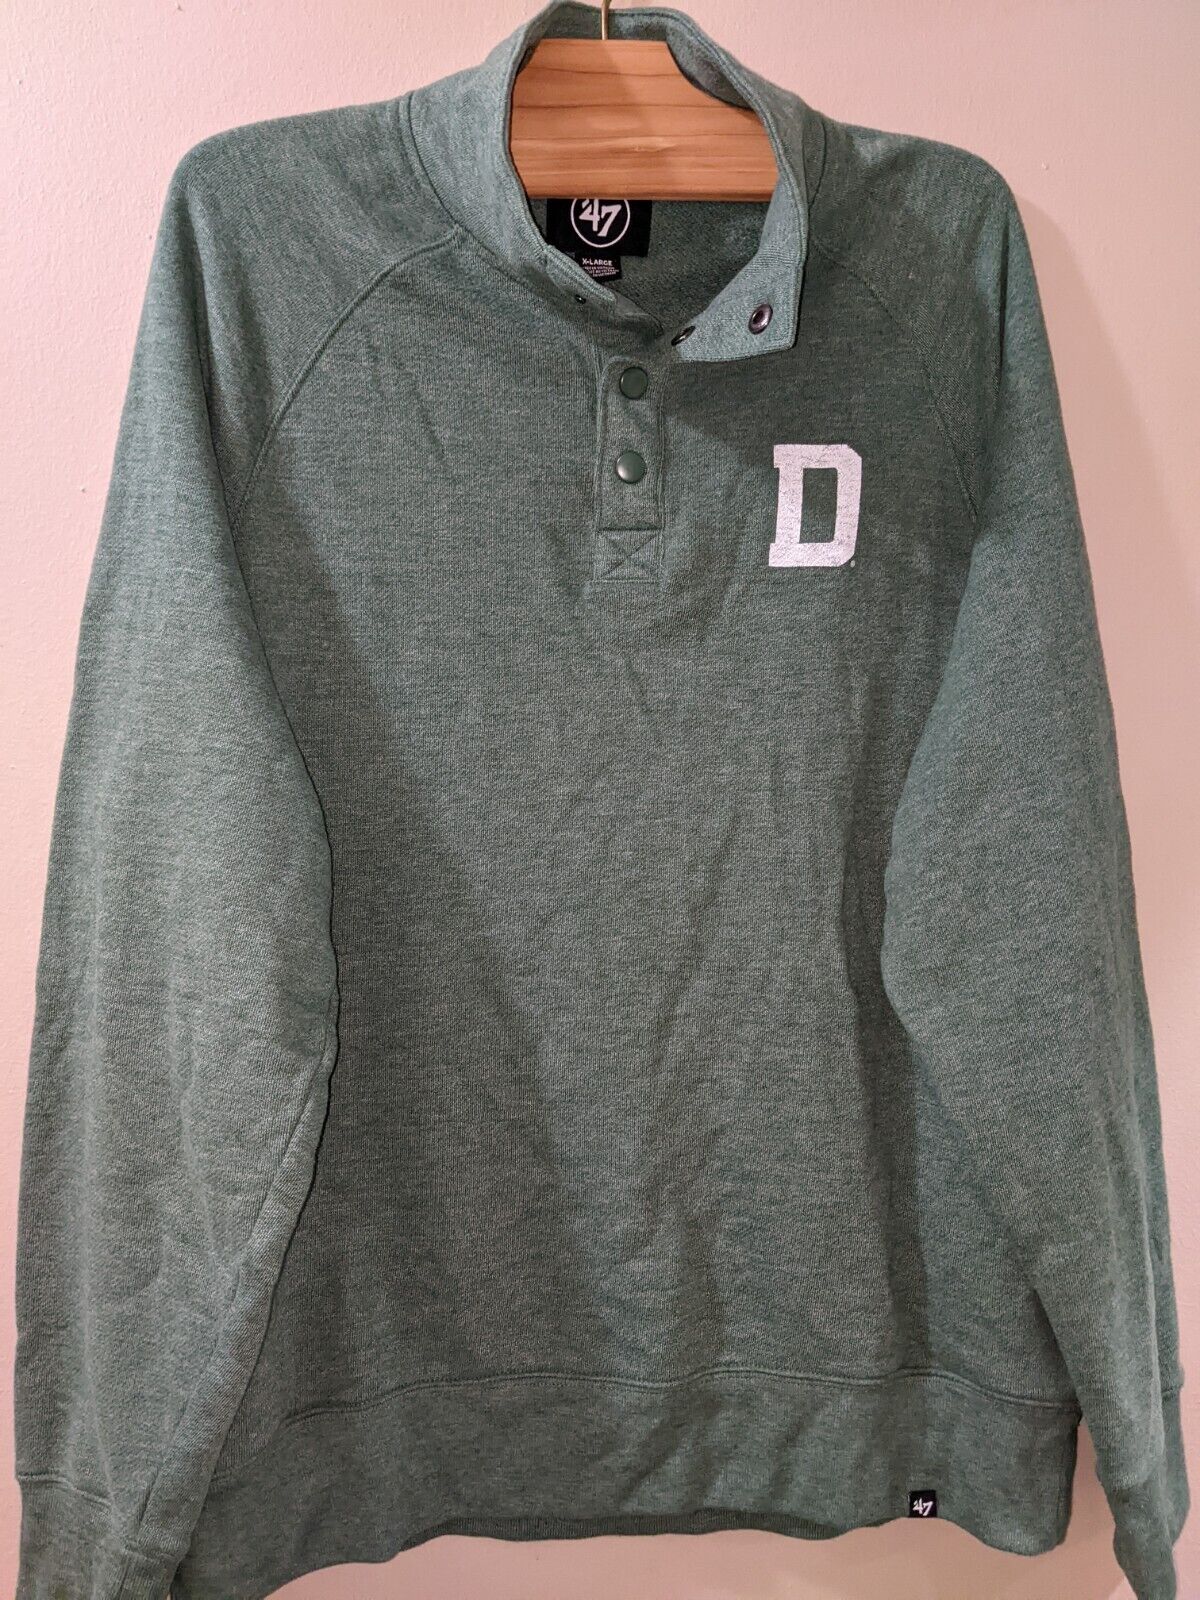 XL~Dartmouth College®️’47 Brand Sweatshirt front button Sweater Green